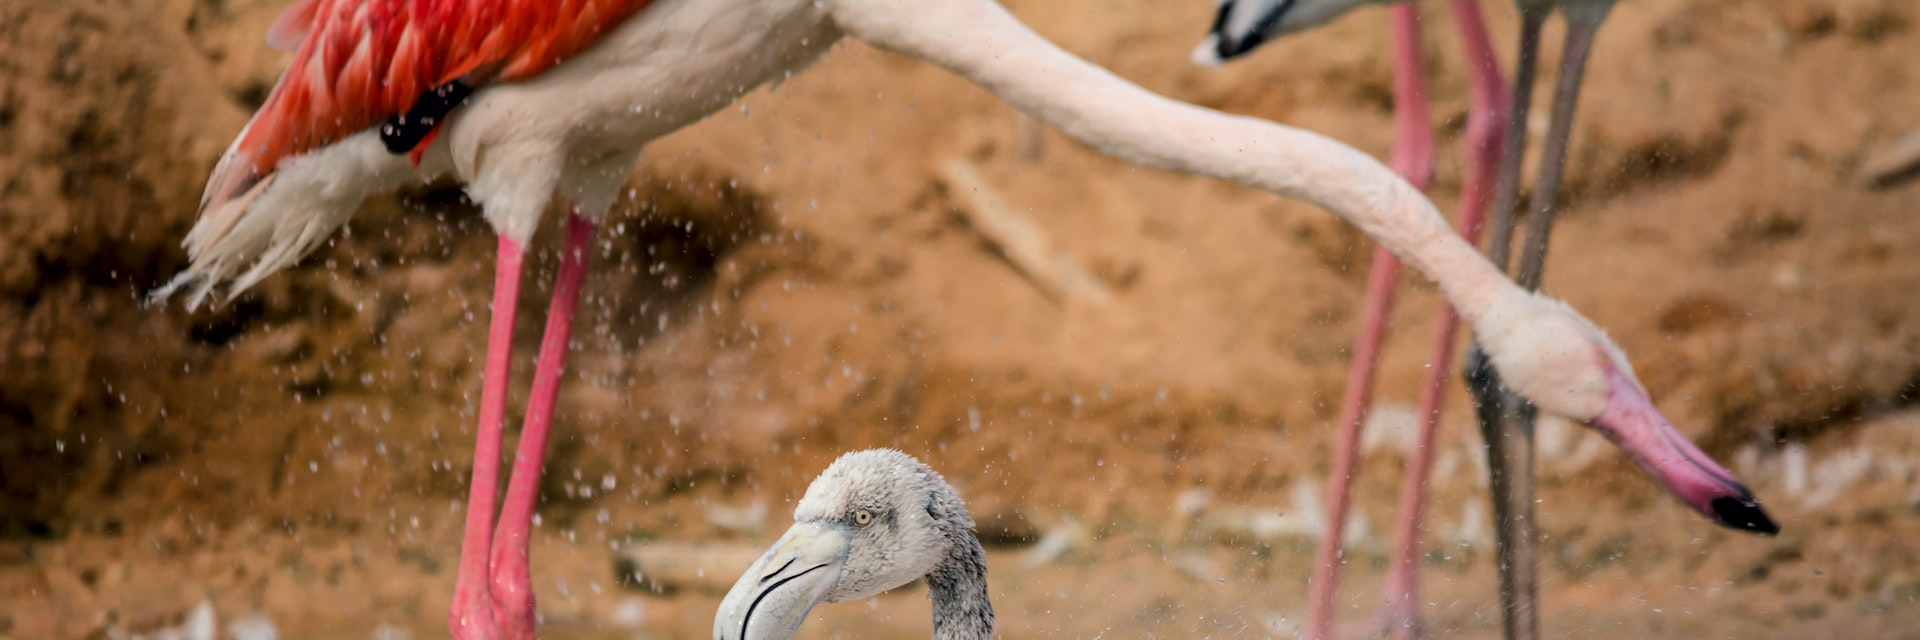 طائر النحام ( الفلامنجو ).......Flamingo.Location Africa Safari park - Egypt .If you like it , please vote